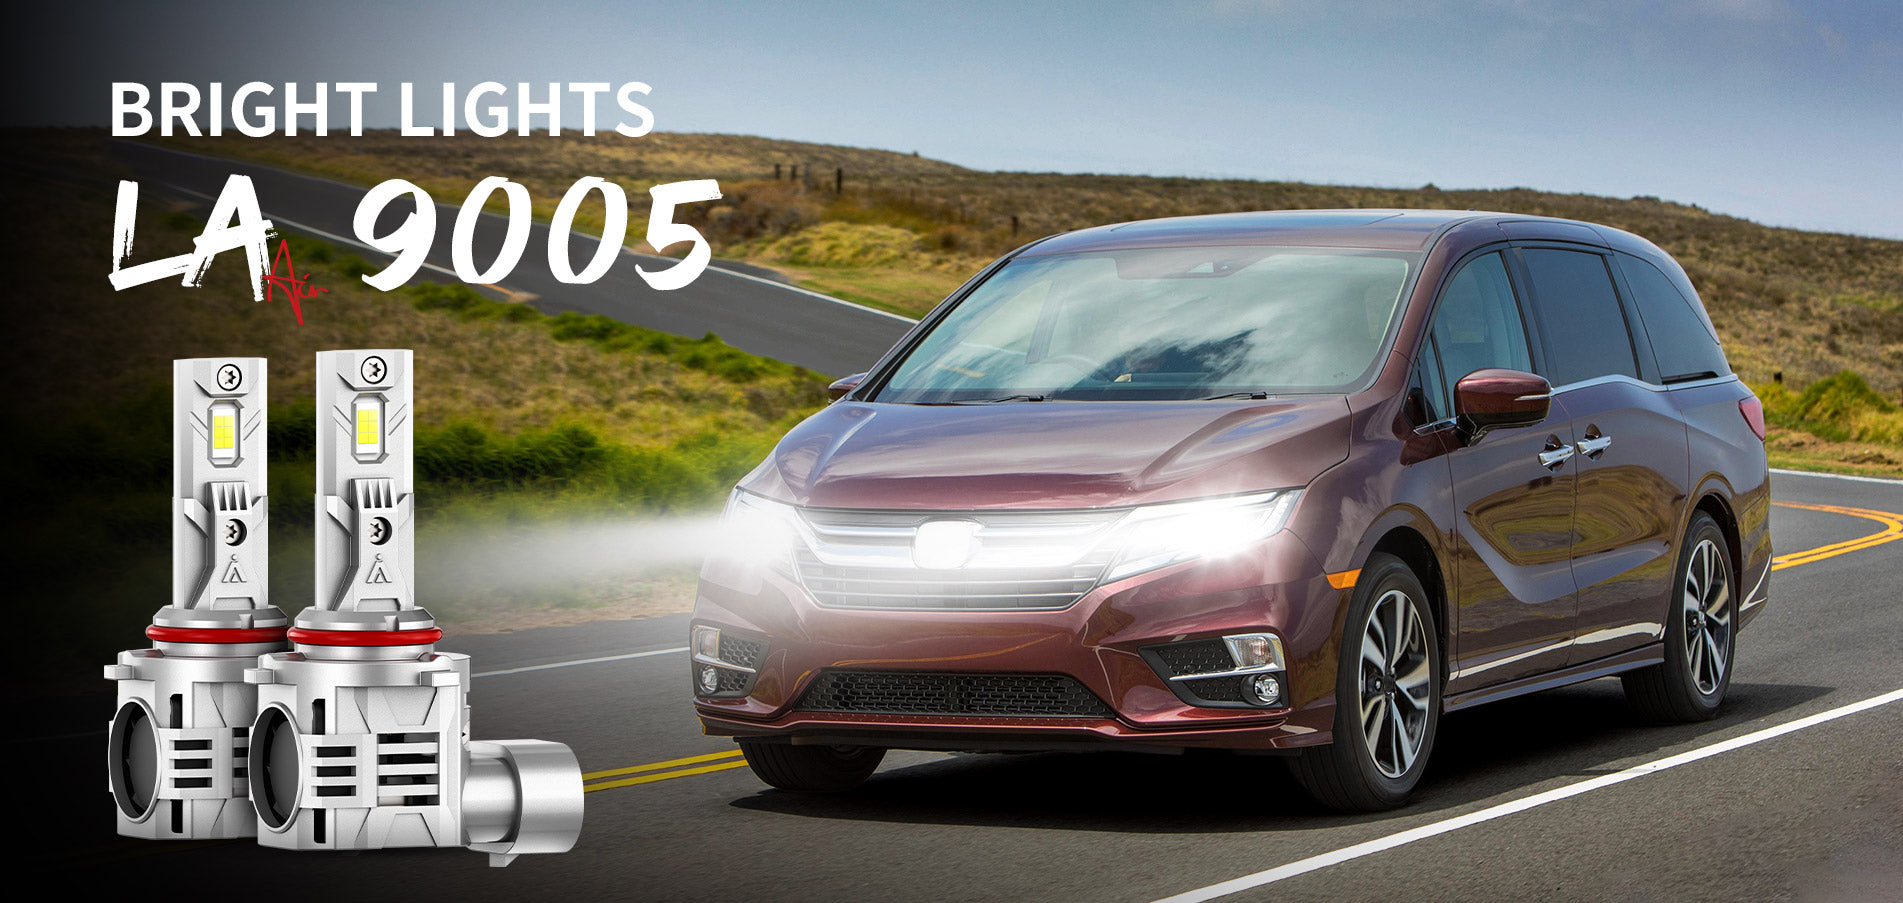 Honda Odyssey 2019-2020 bright lights